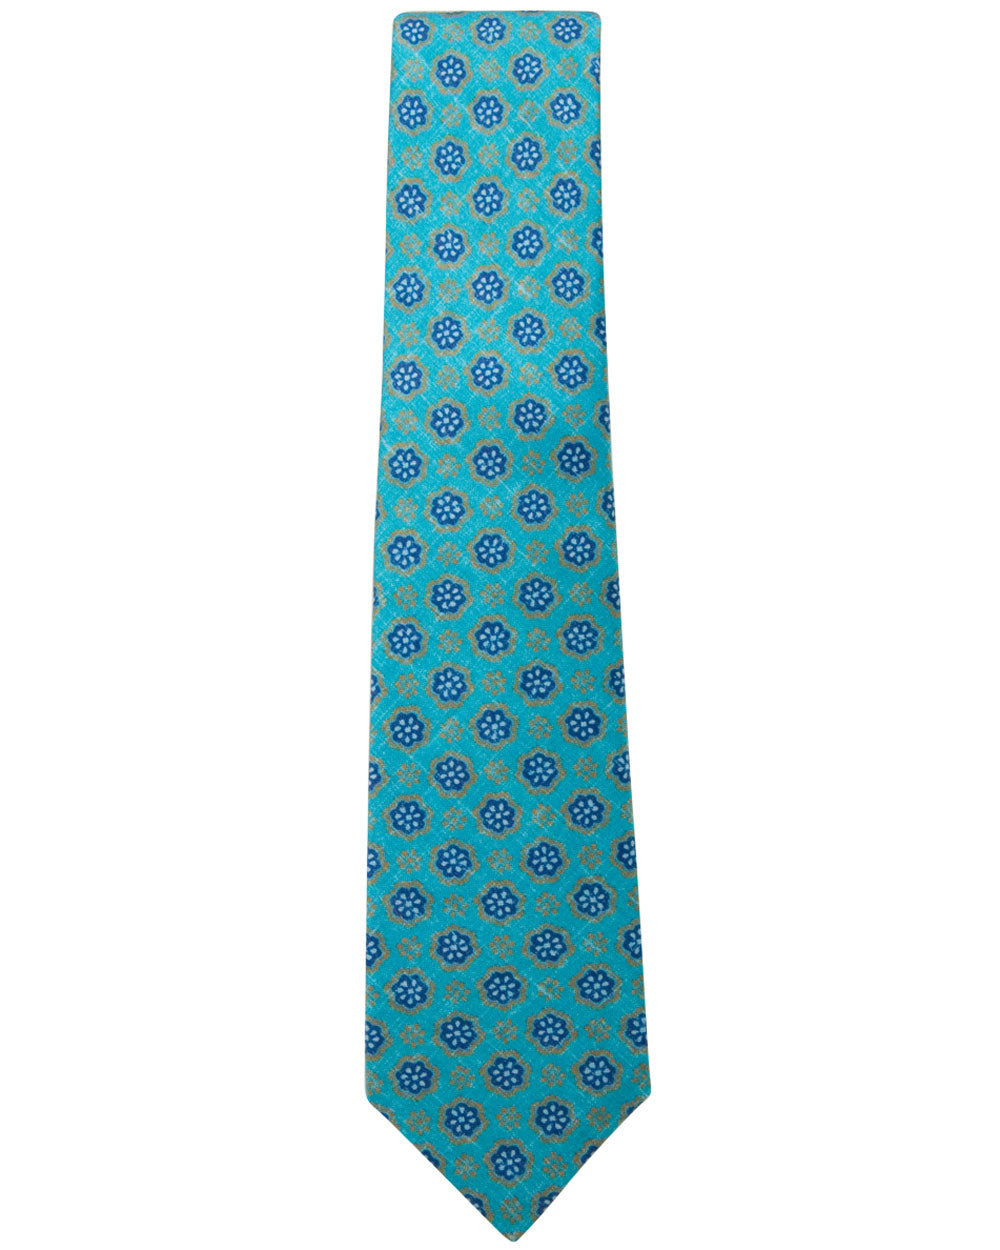 Aqua and Navy Blue Floral Tie